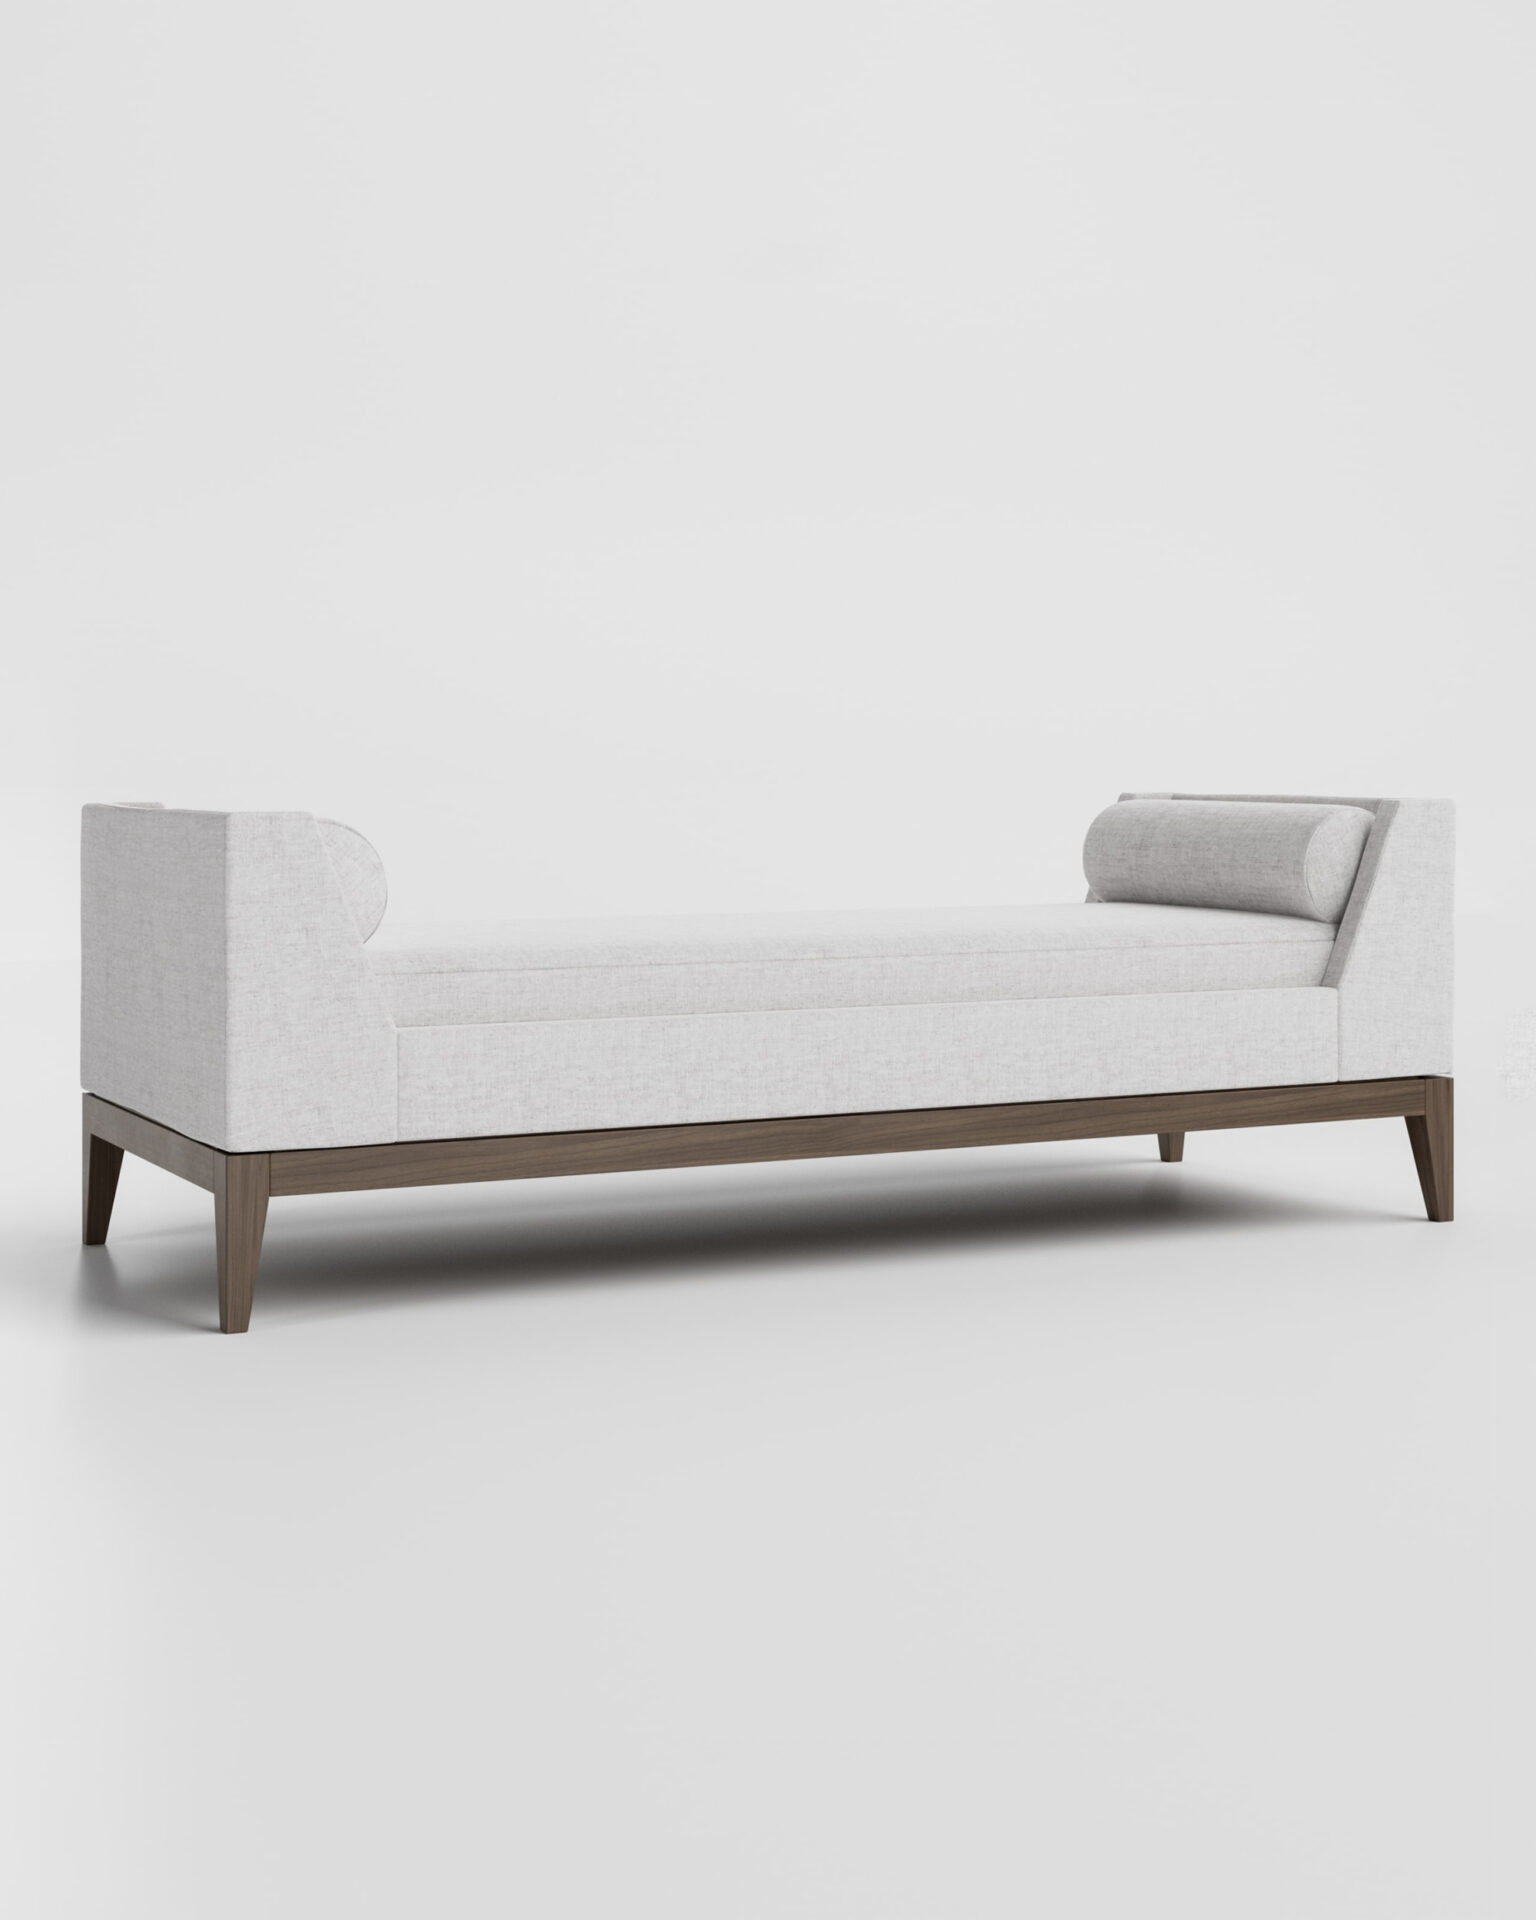 Aguirre Design_Lugano Bench_Seating_Studio Fenice_ (4)